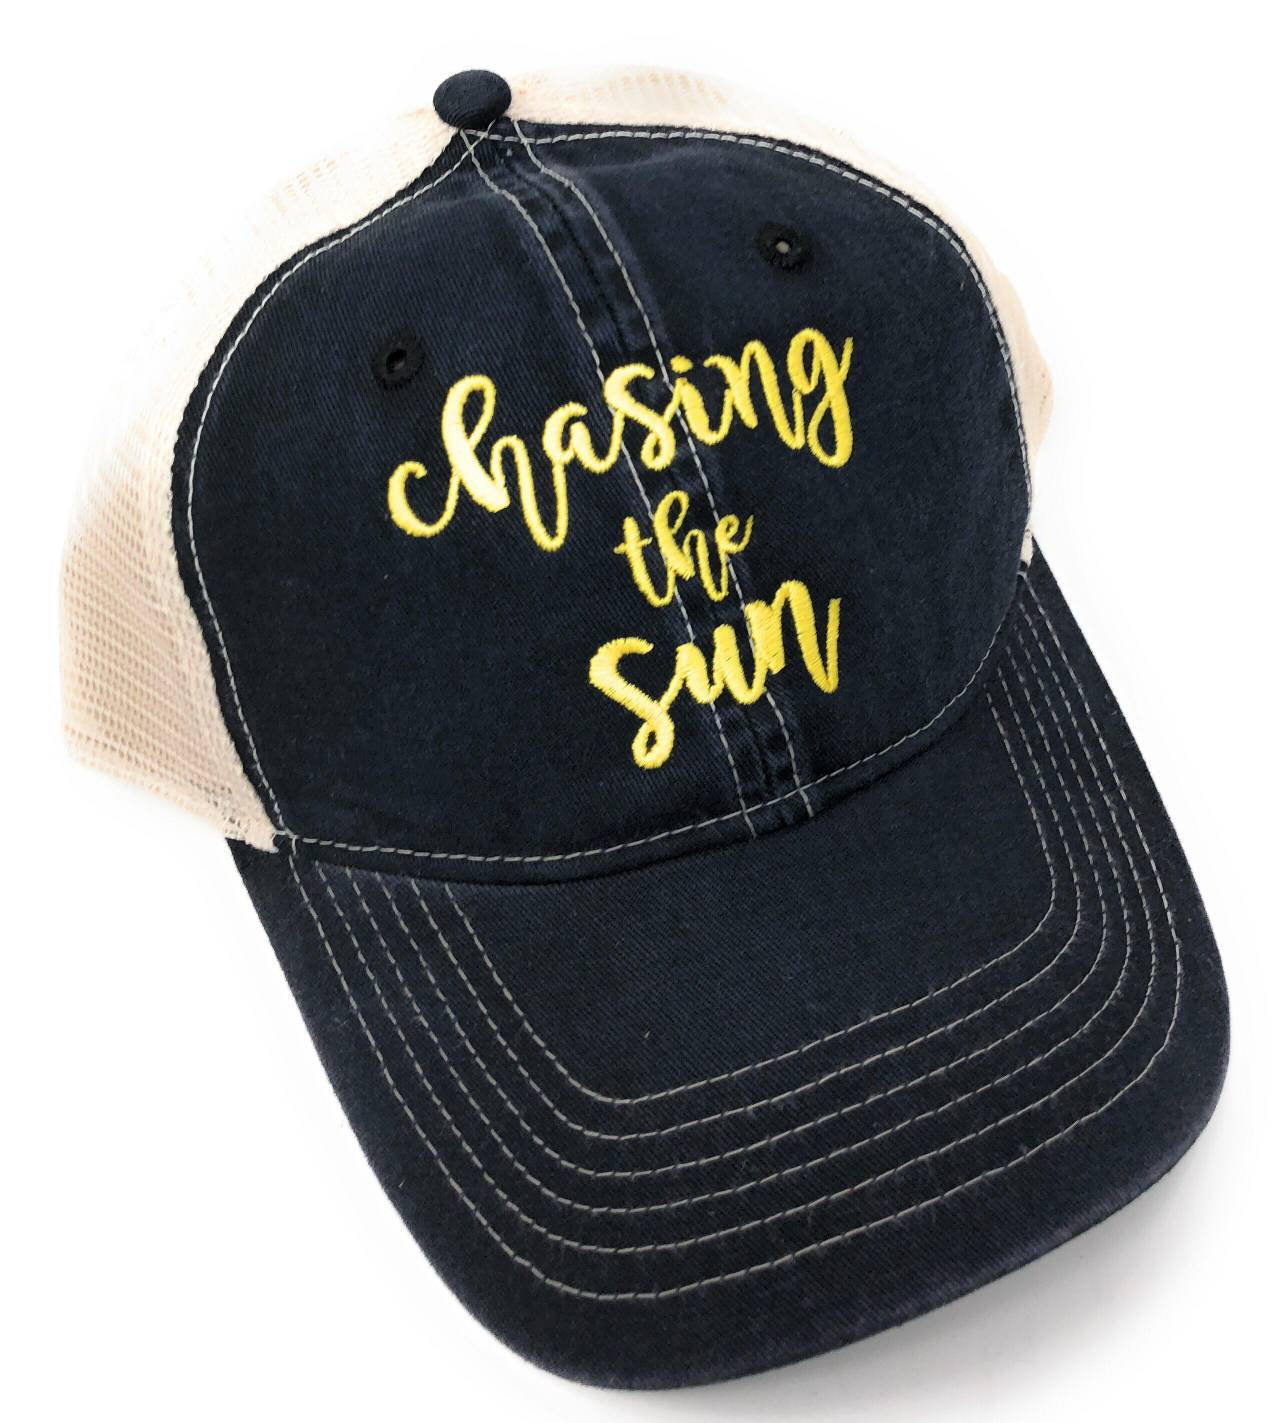 "Chasing The Sun" Hat